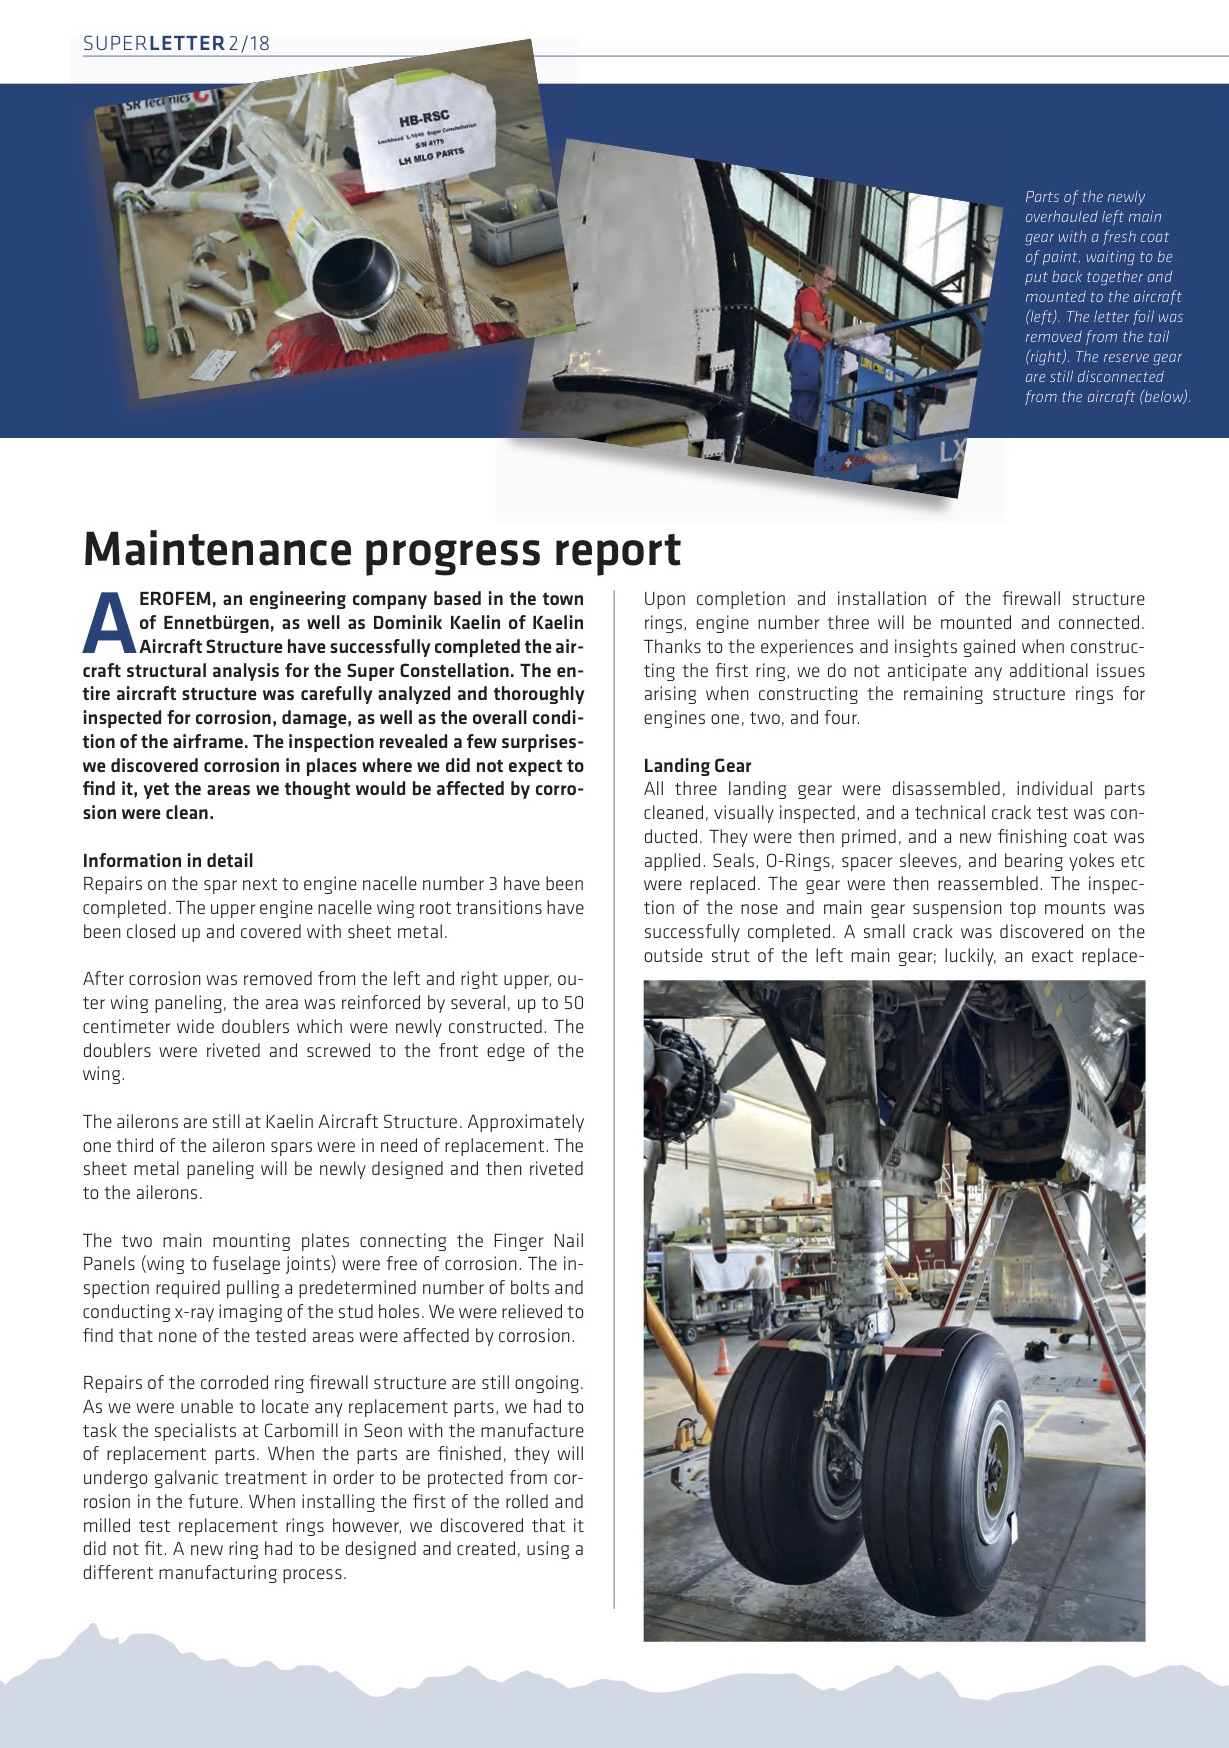 Maintenance Report E 1